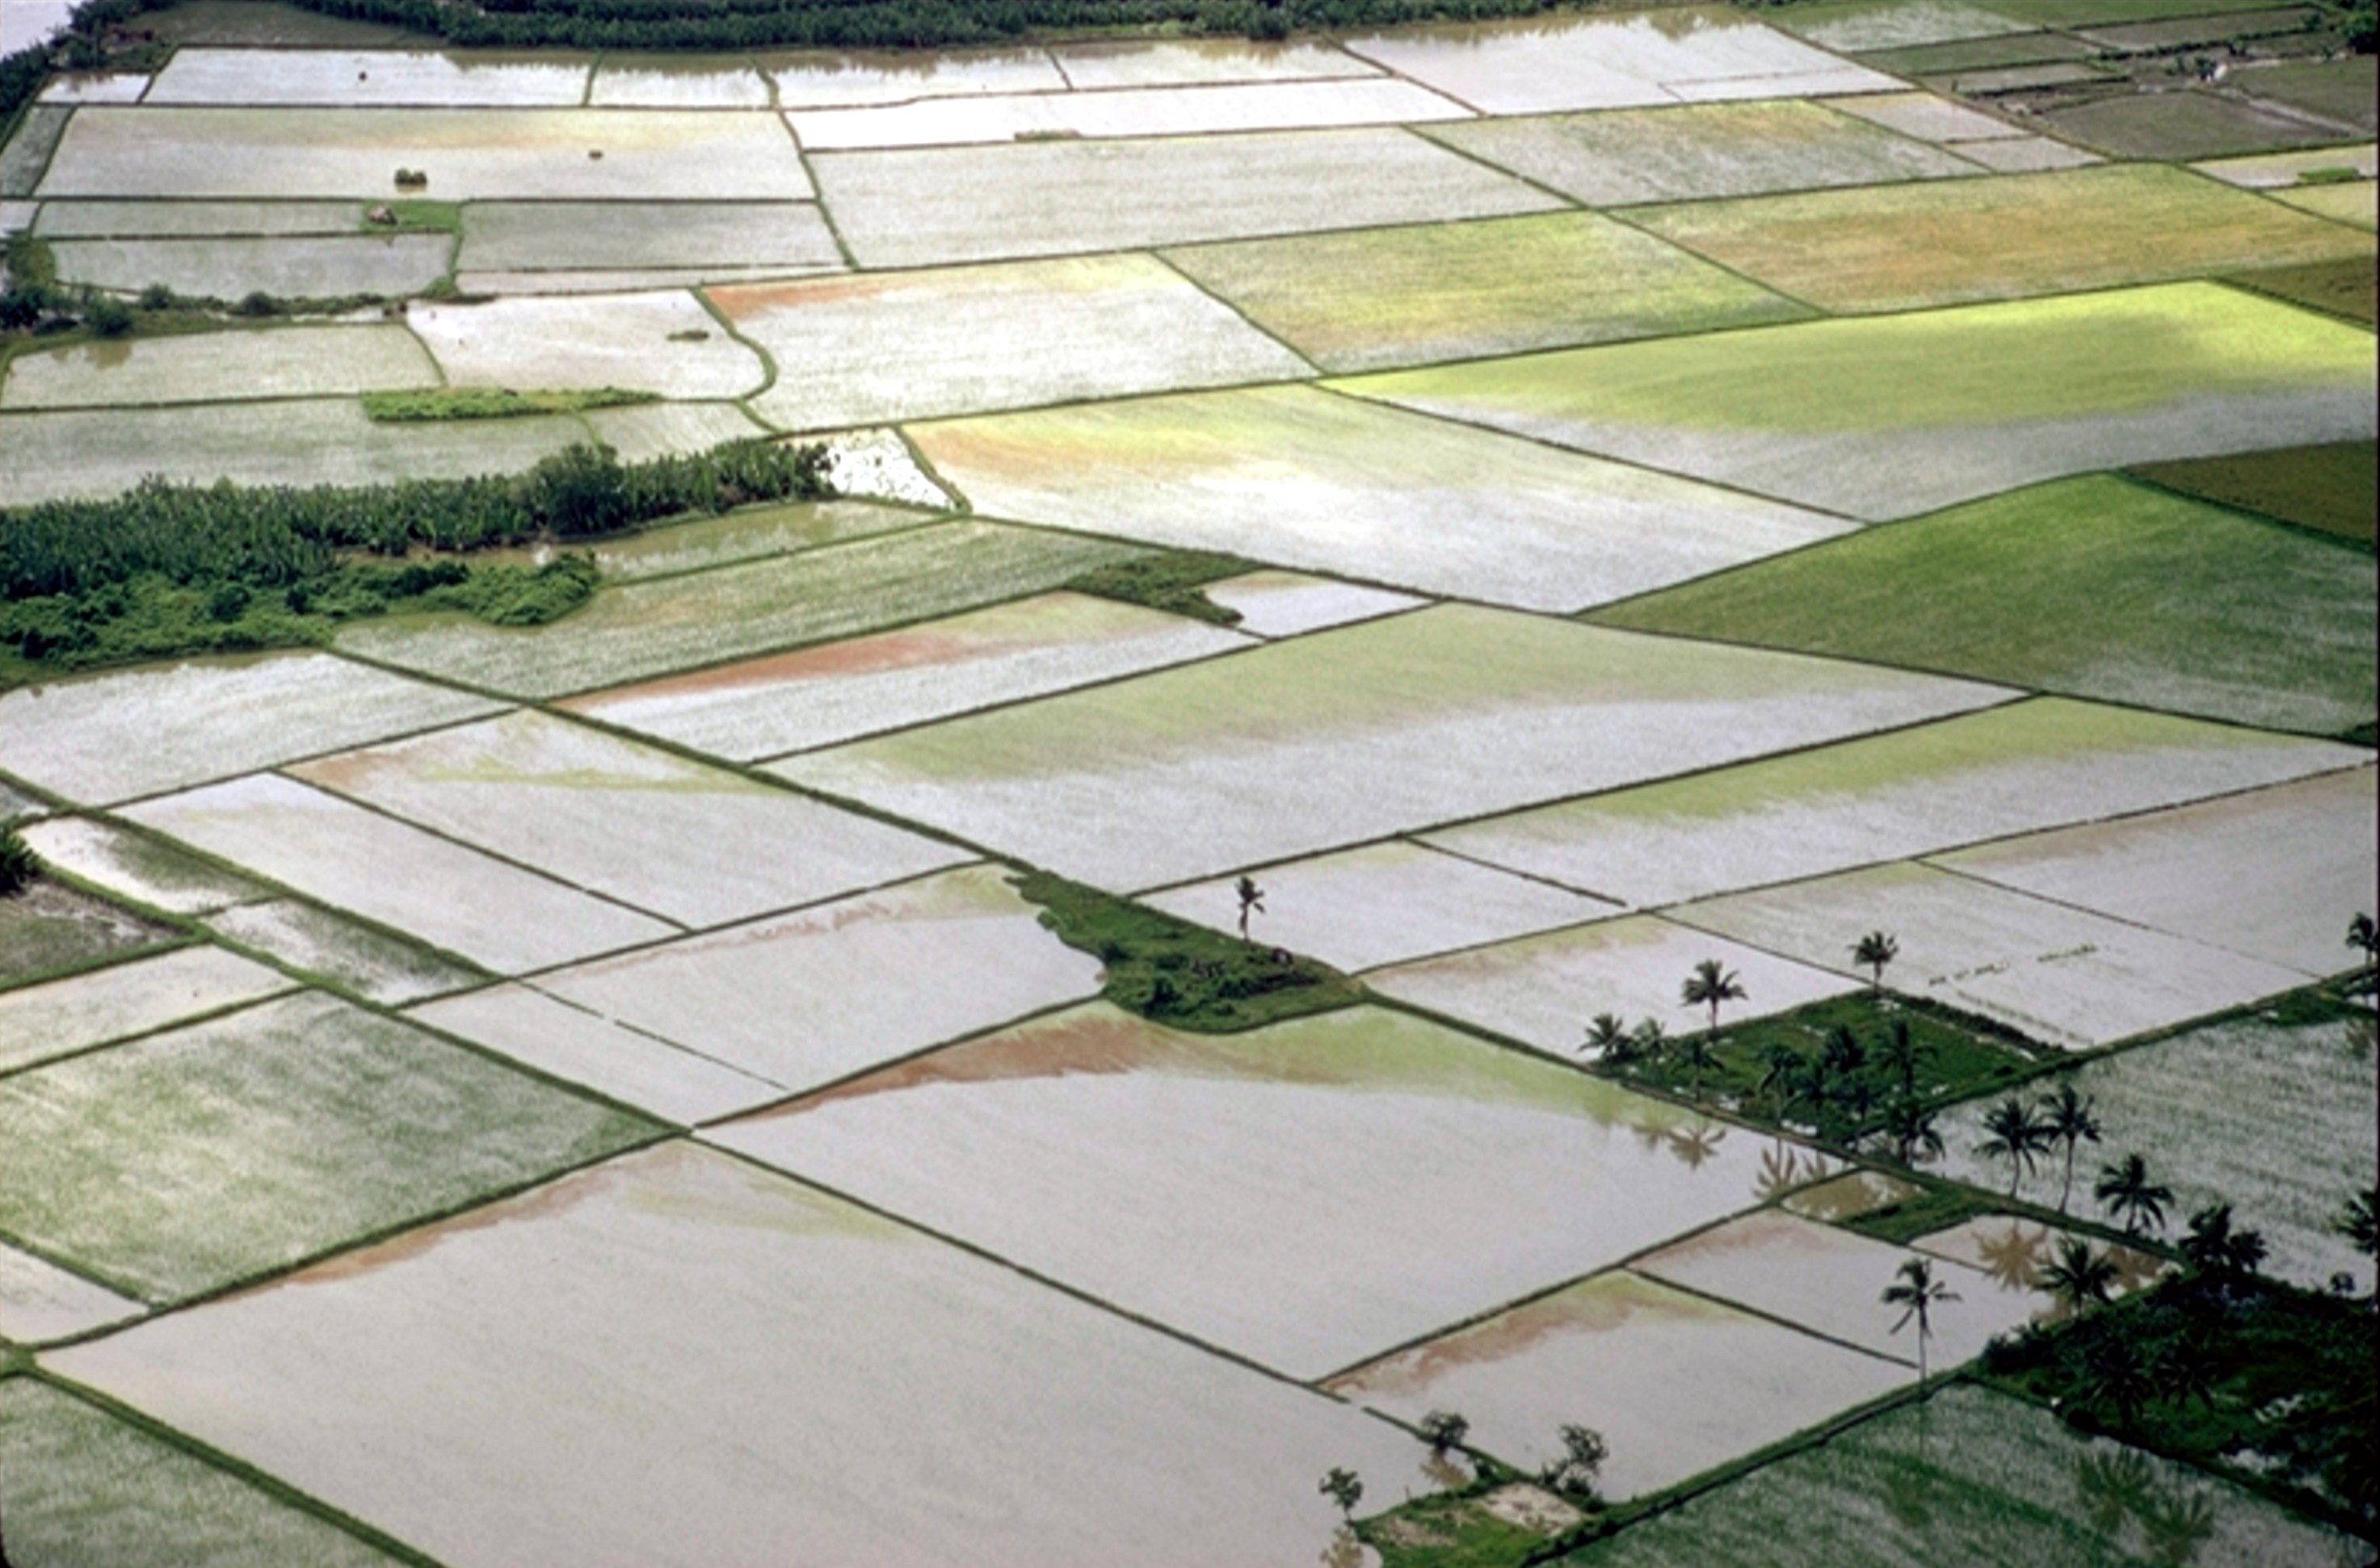 Vietnam rice paddies from the air